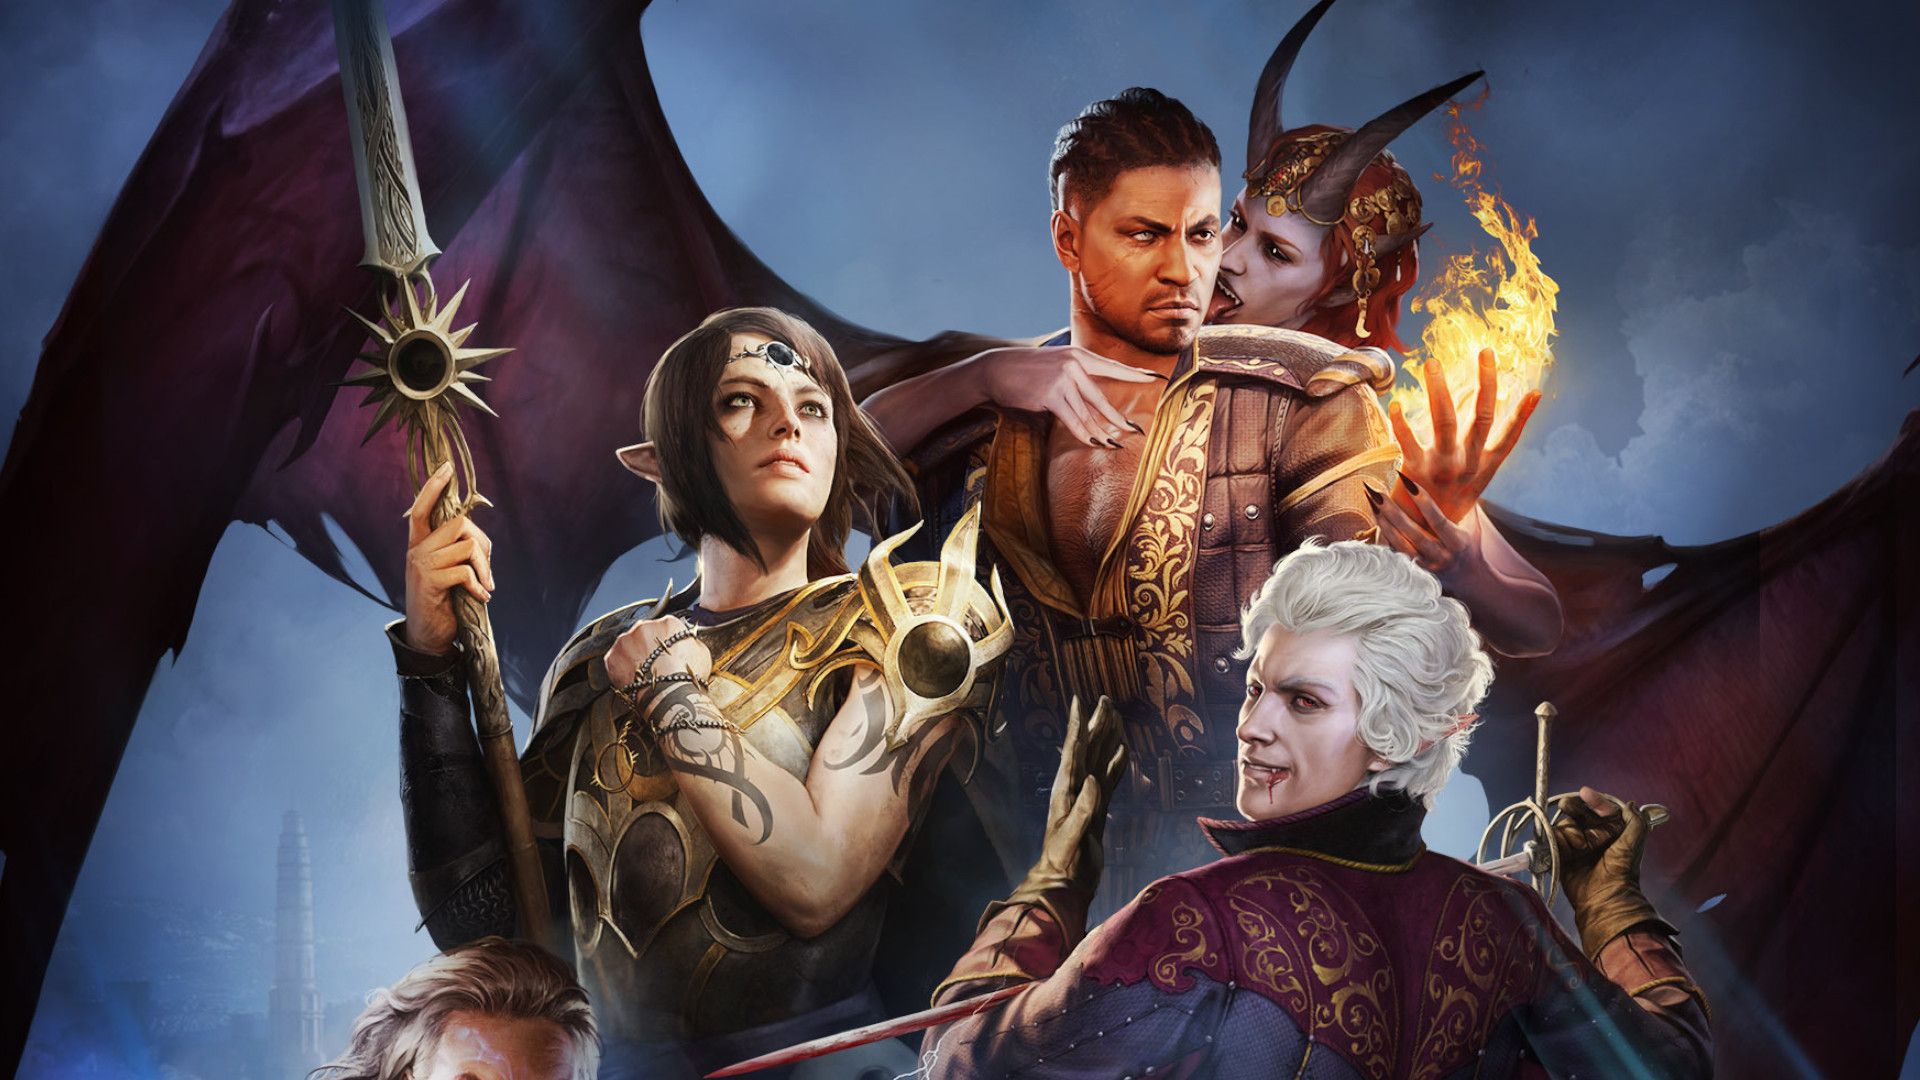 Baldur's Gate 3 release time revealed